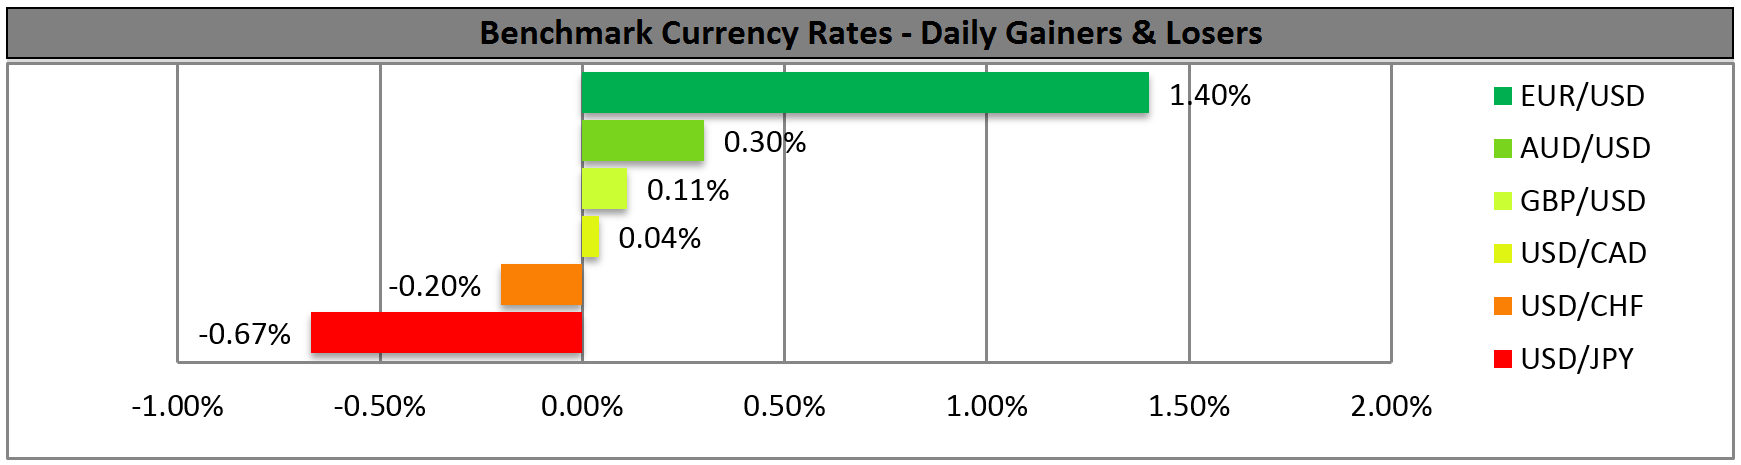 Benchmark FX Rates